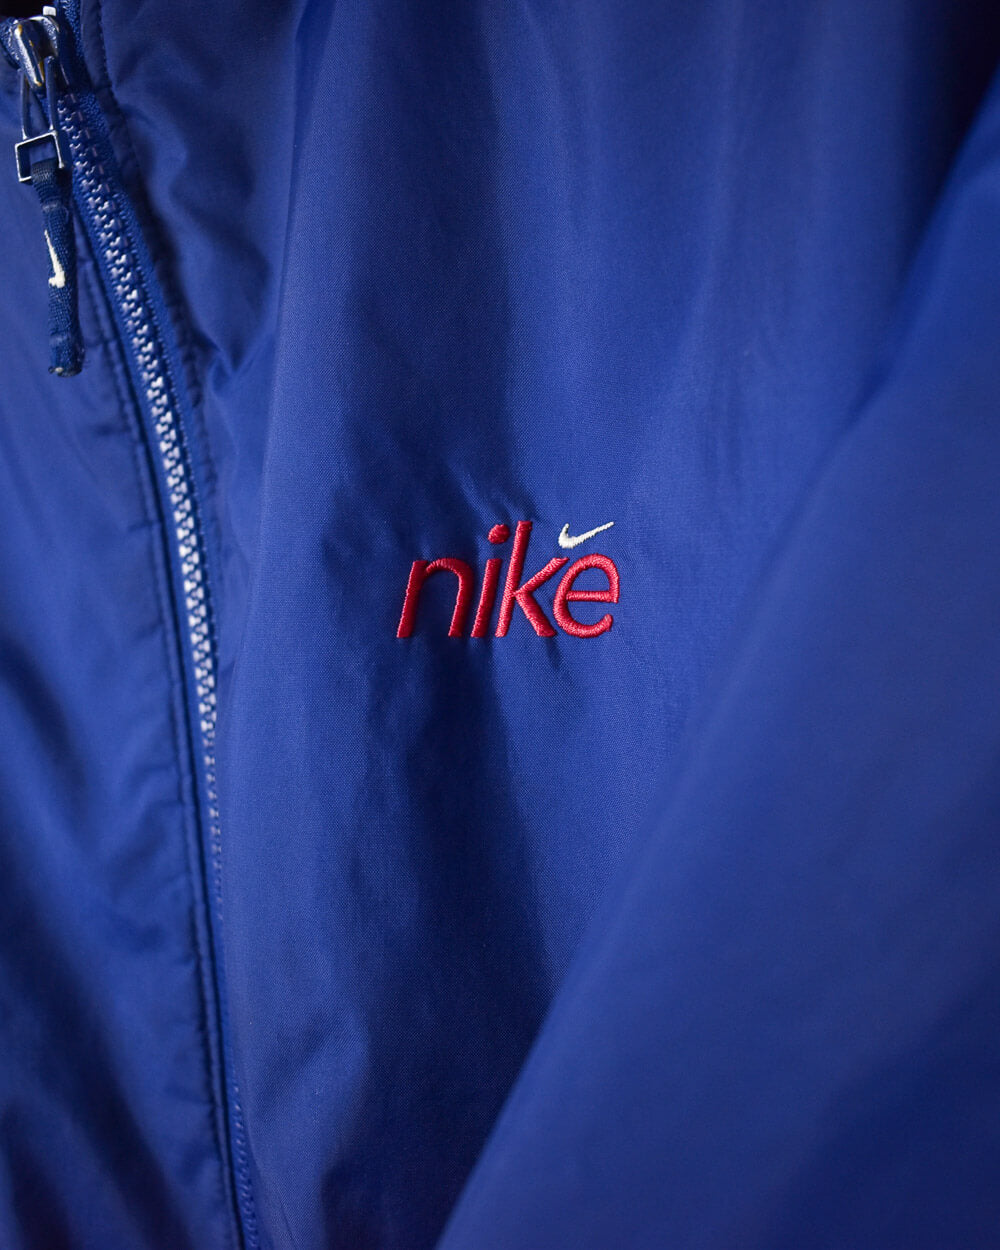 Nike Fleece Lined Coat - Medium - Domno Vintage 90s, 80s, 00s Retro and Vintage Clothing 